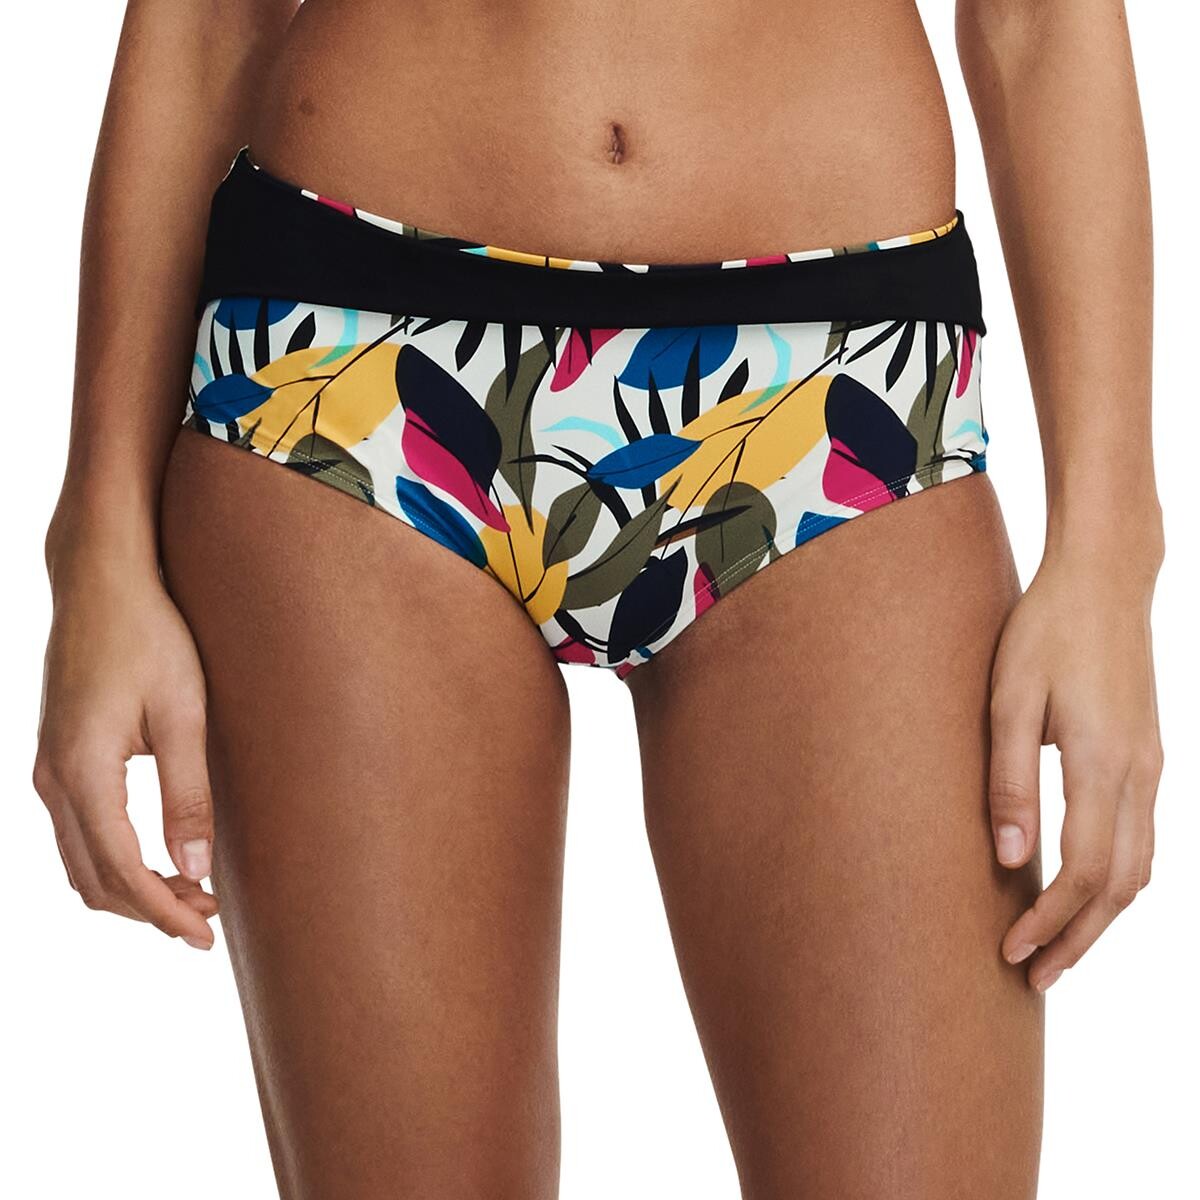 Femilet Honduras Bikini Maxi Trusse, Farve: Multicolor Leaves, Størrelse: 38, Dame